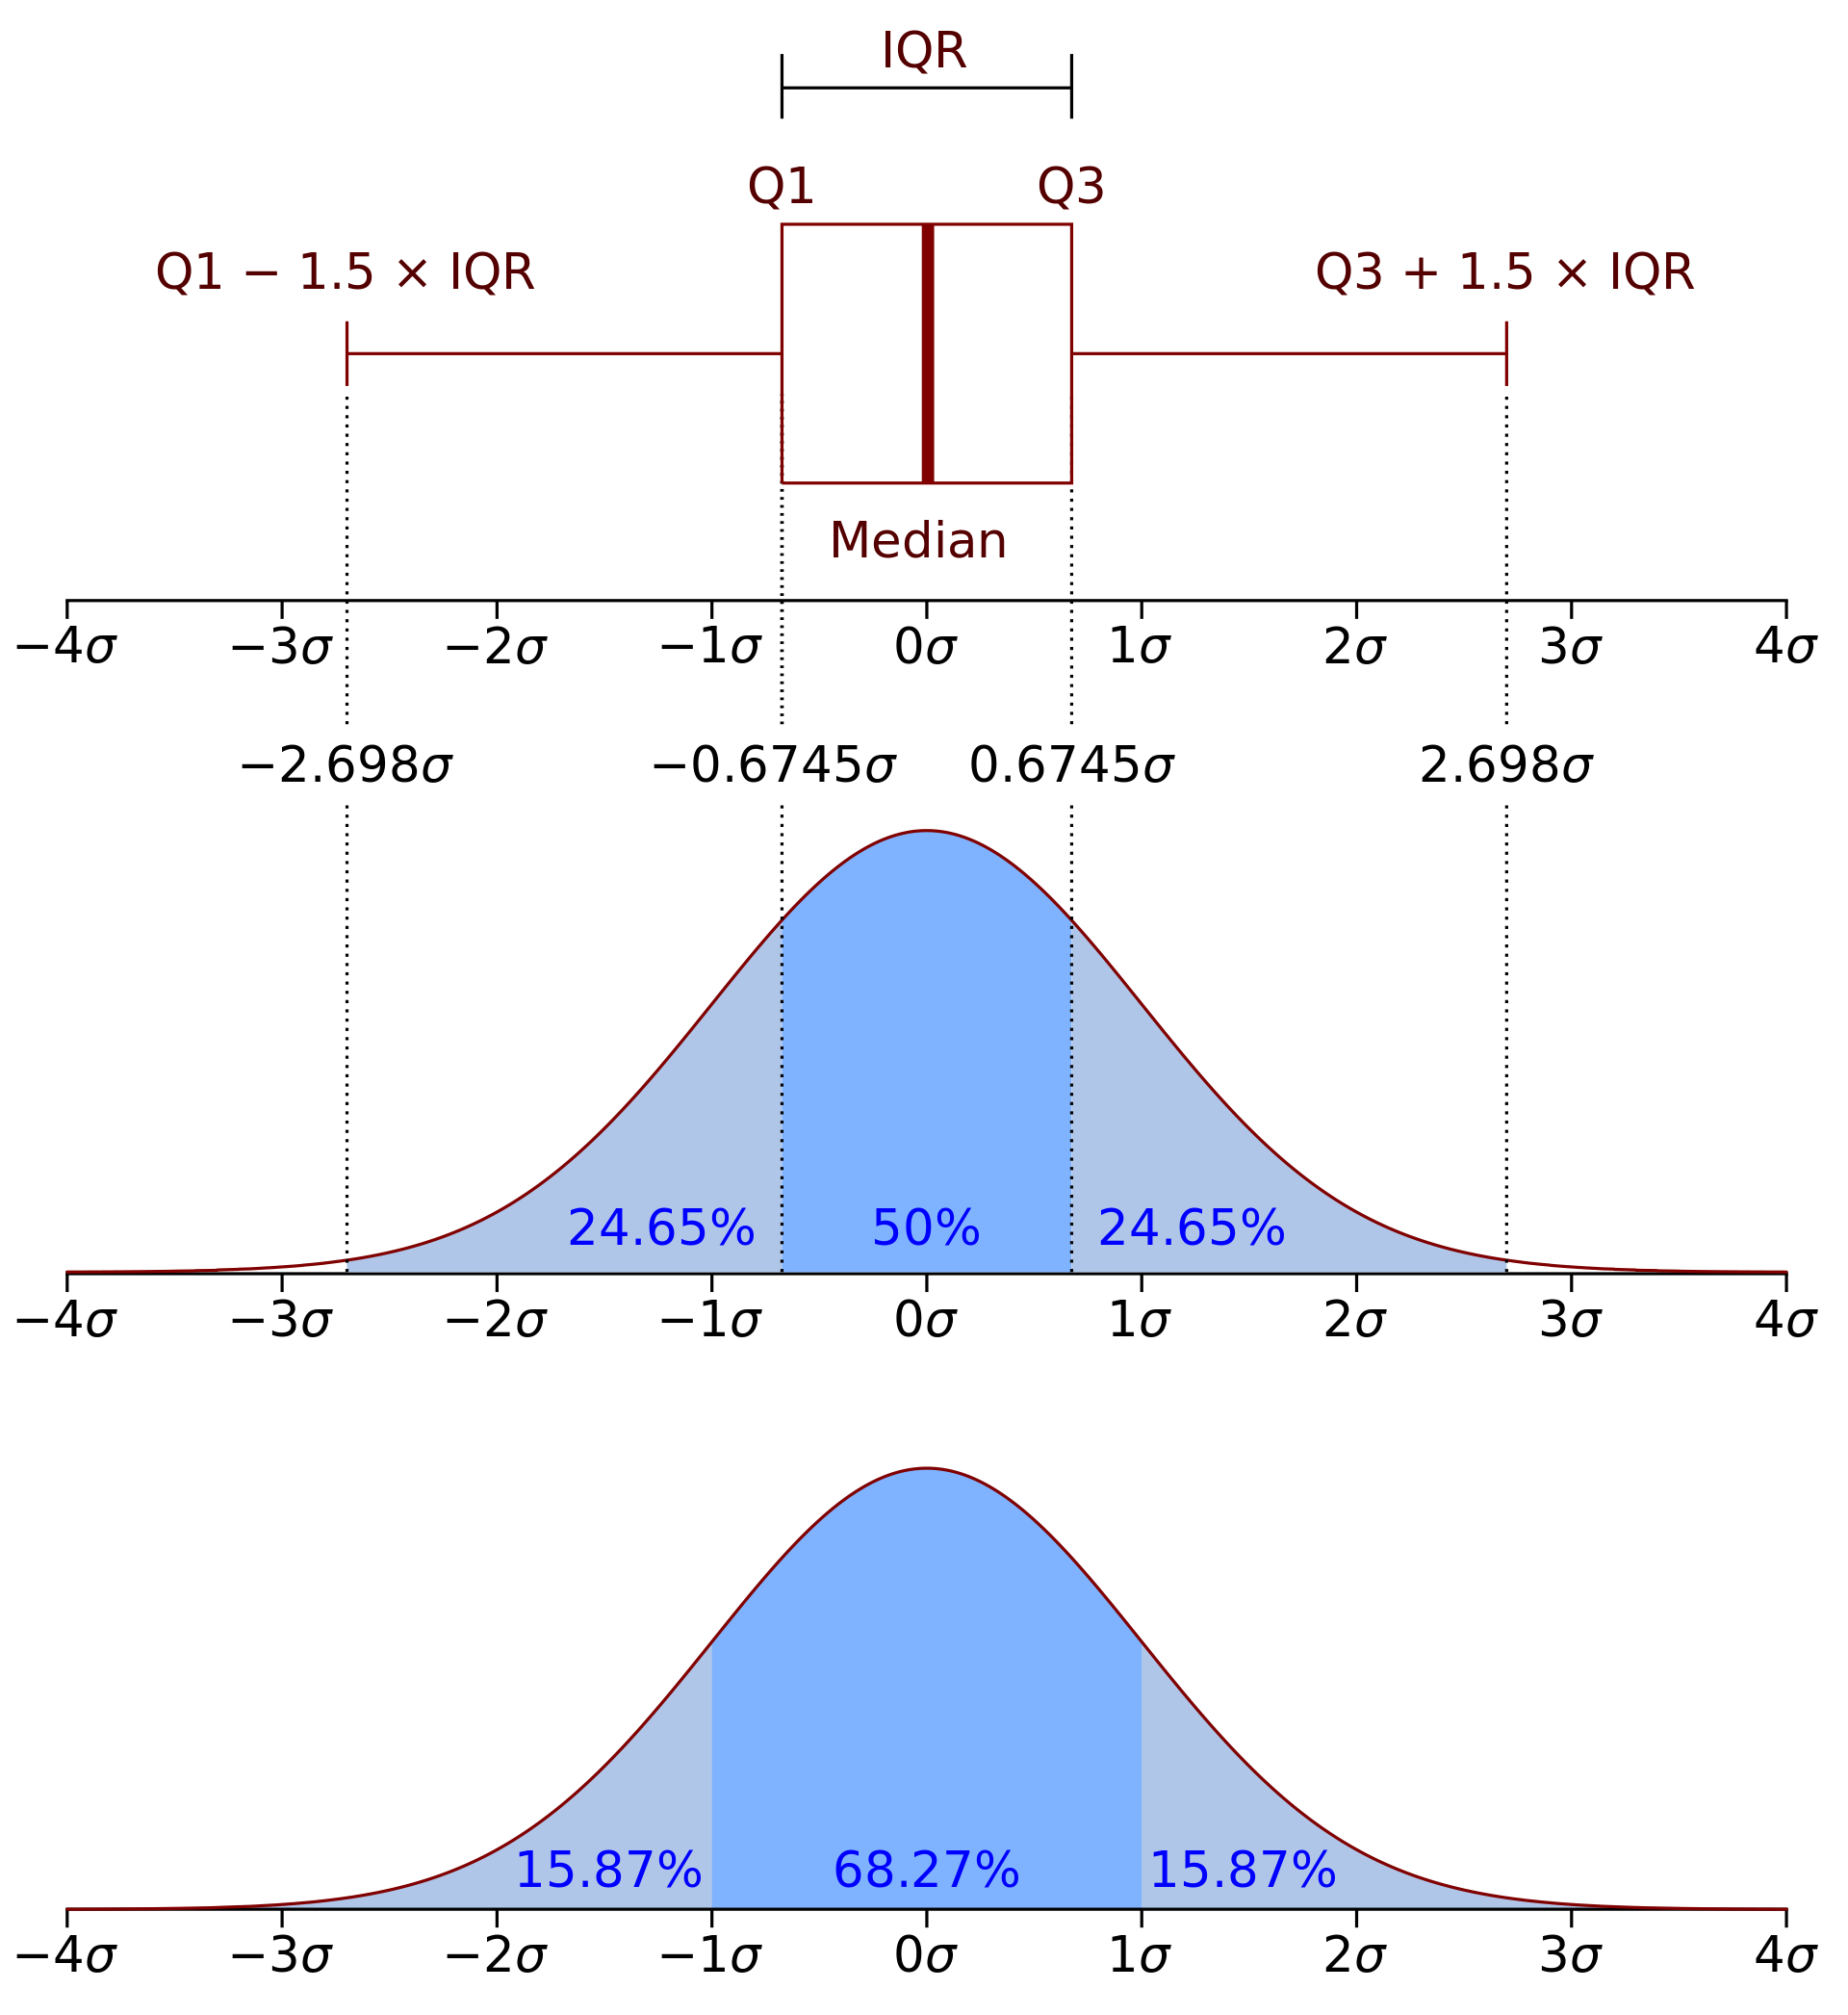 Whisker location interpretation for a normal distribution.